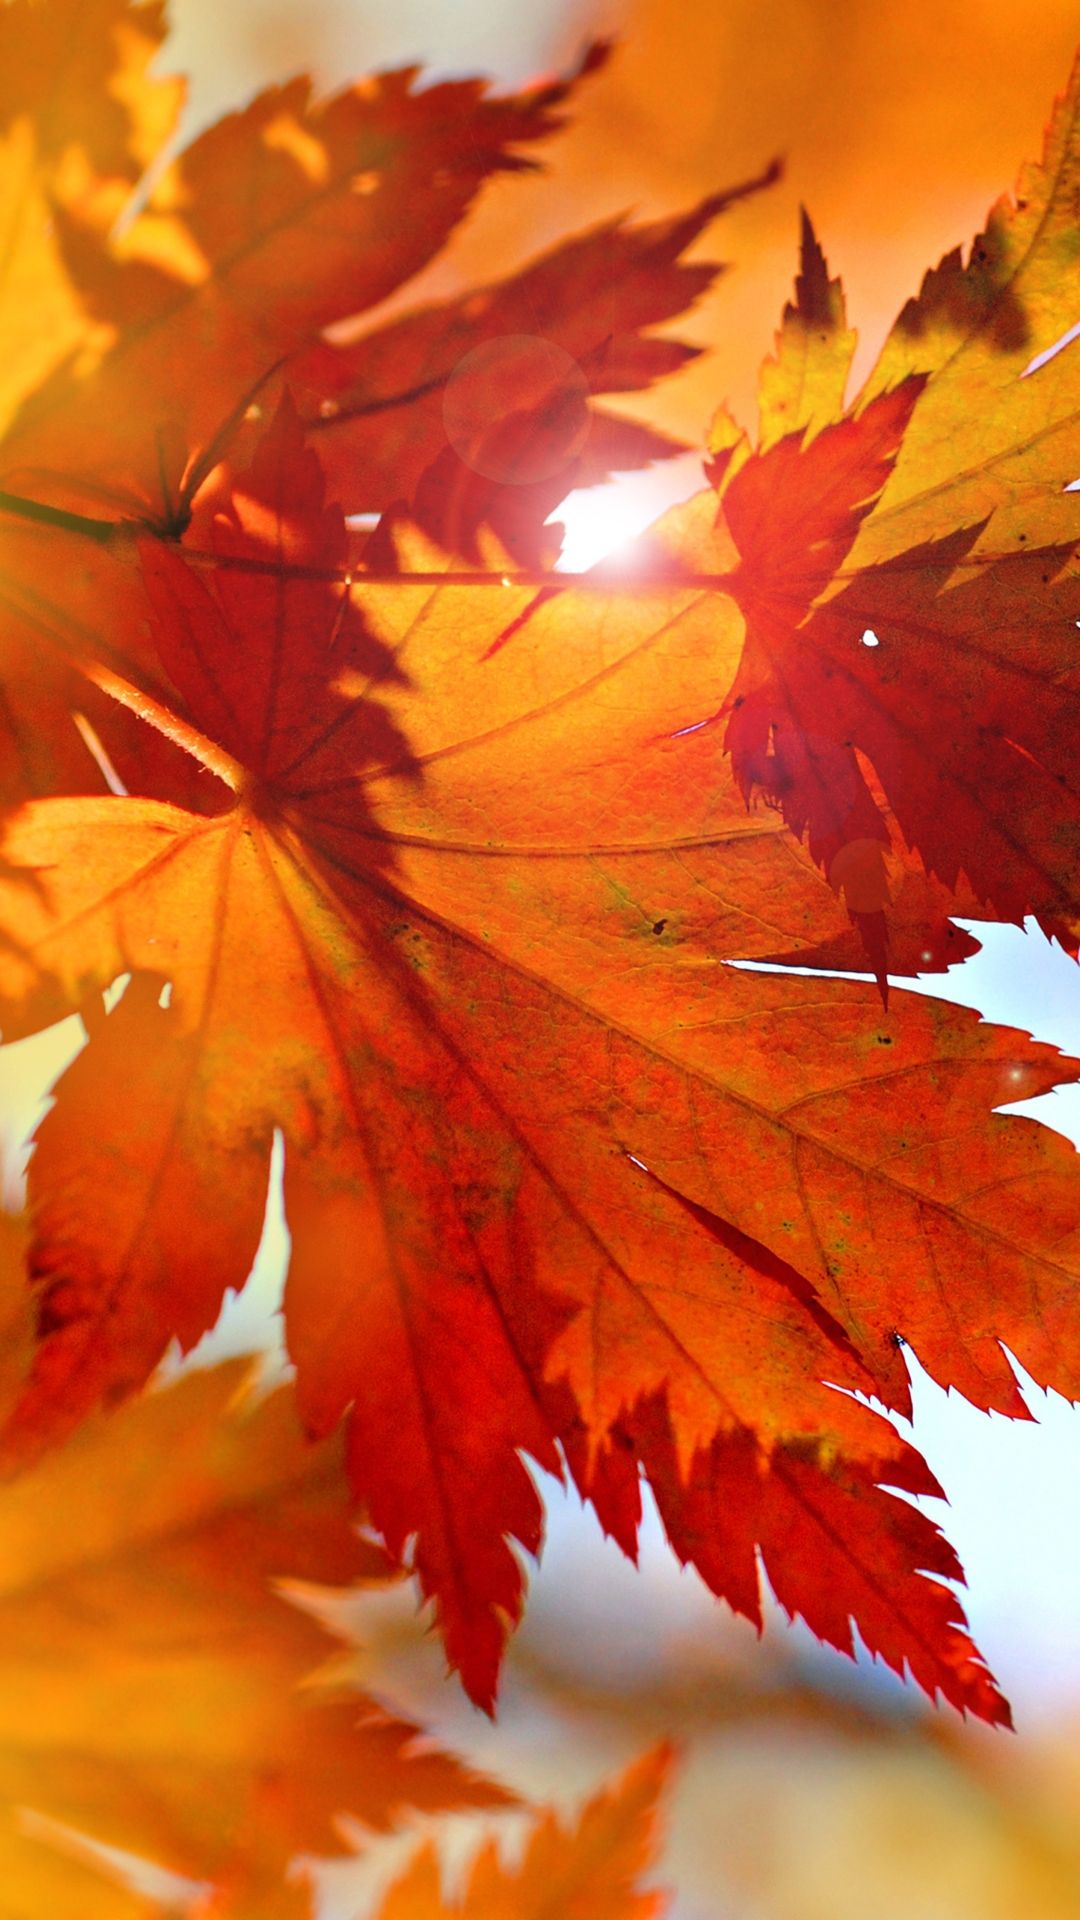 Leaves Fall Wallpaper Android Kecbio